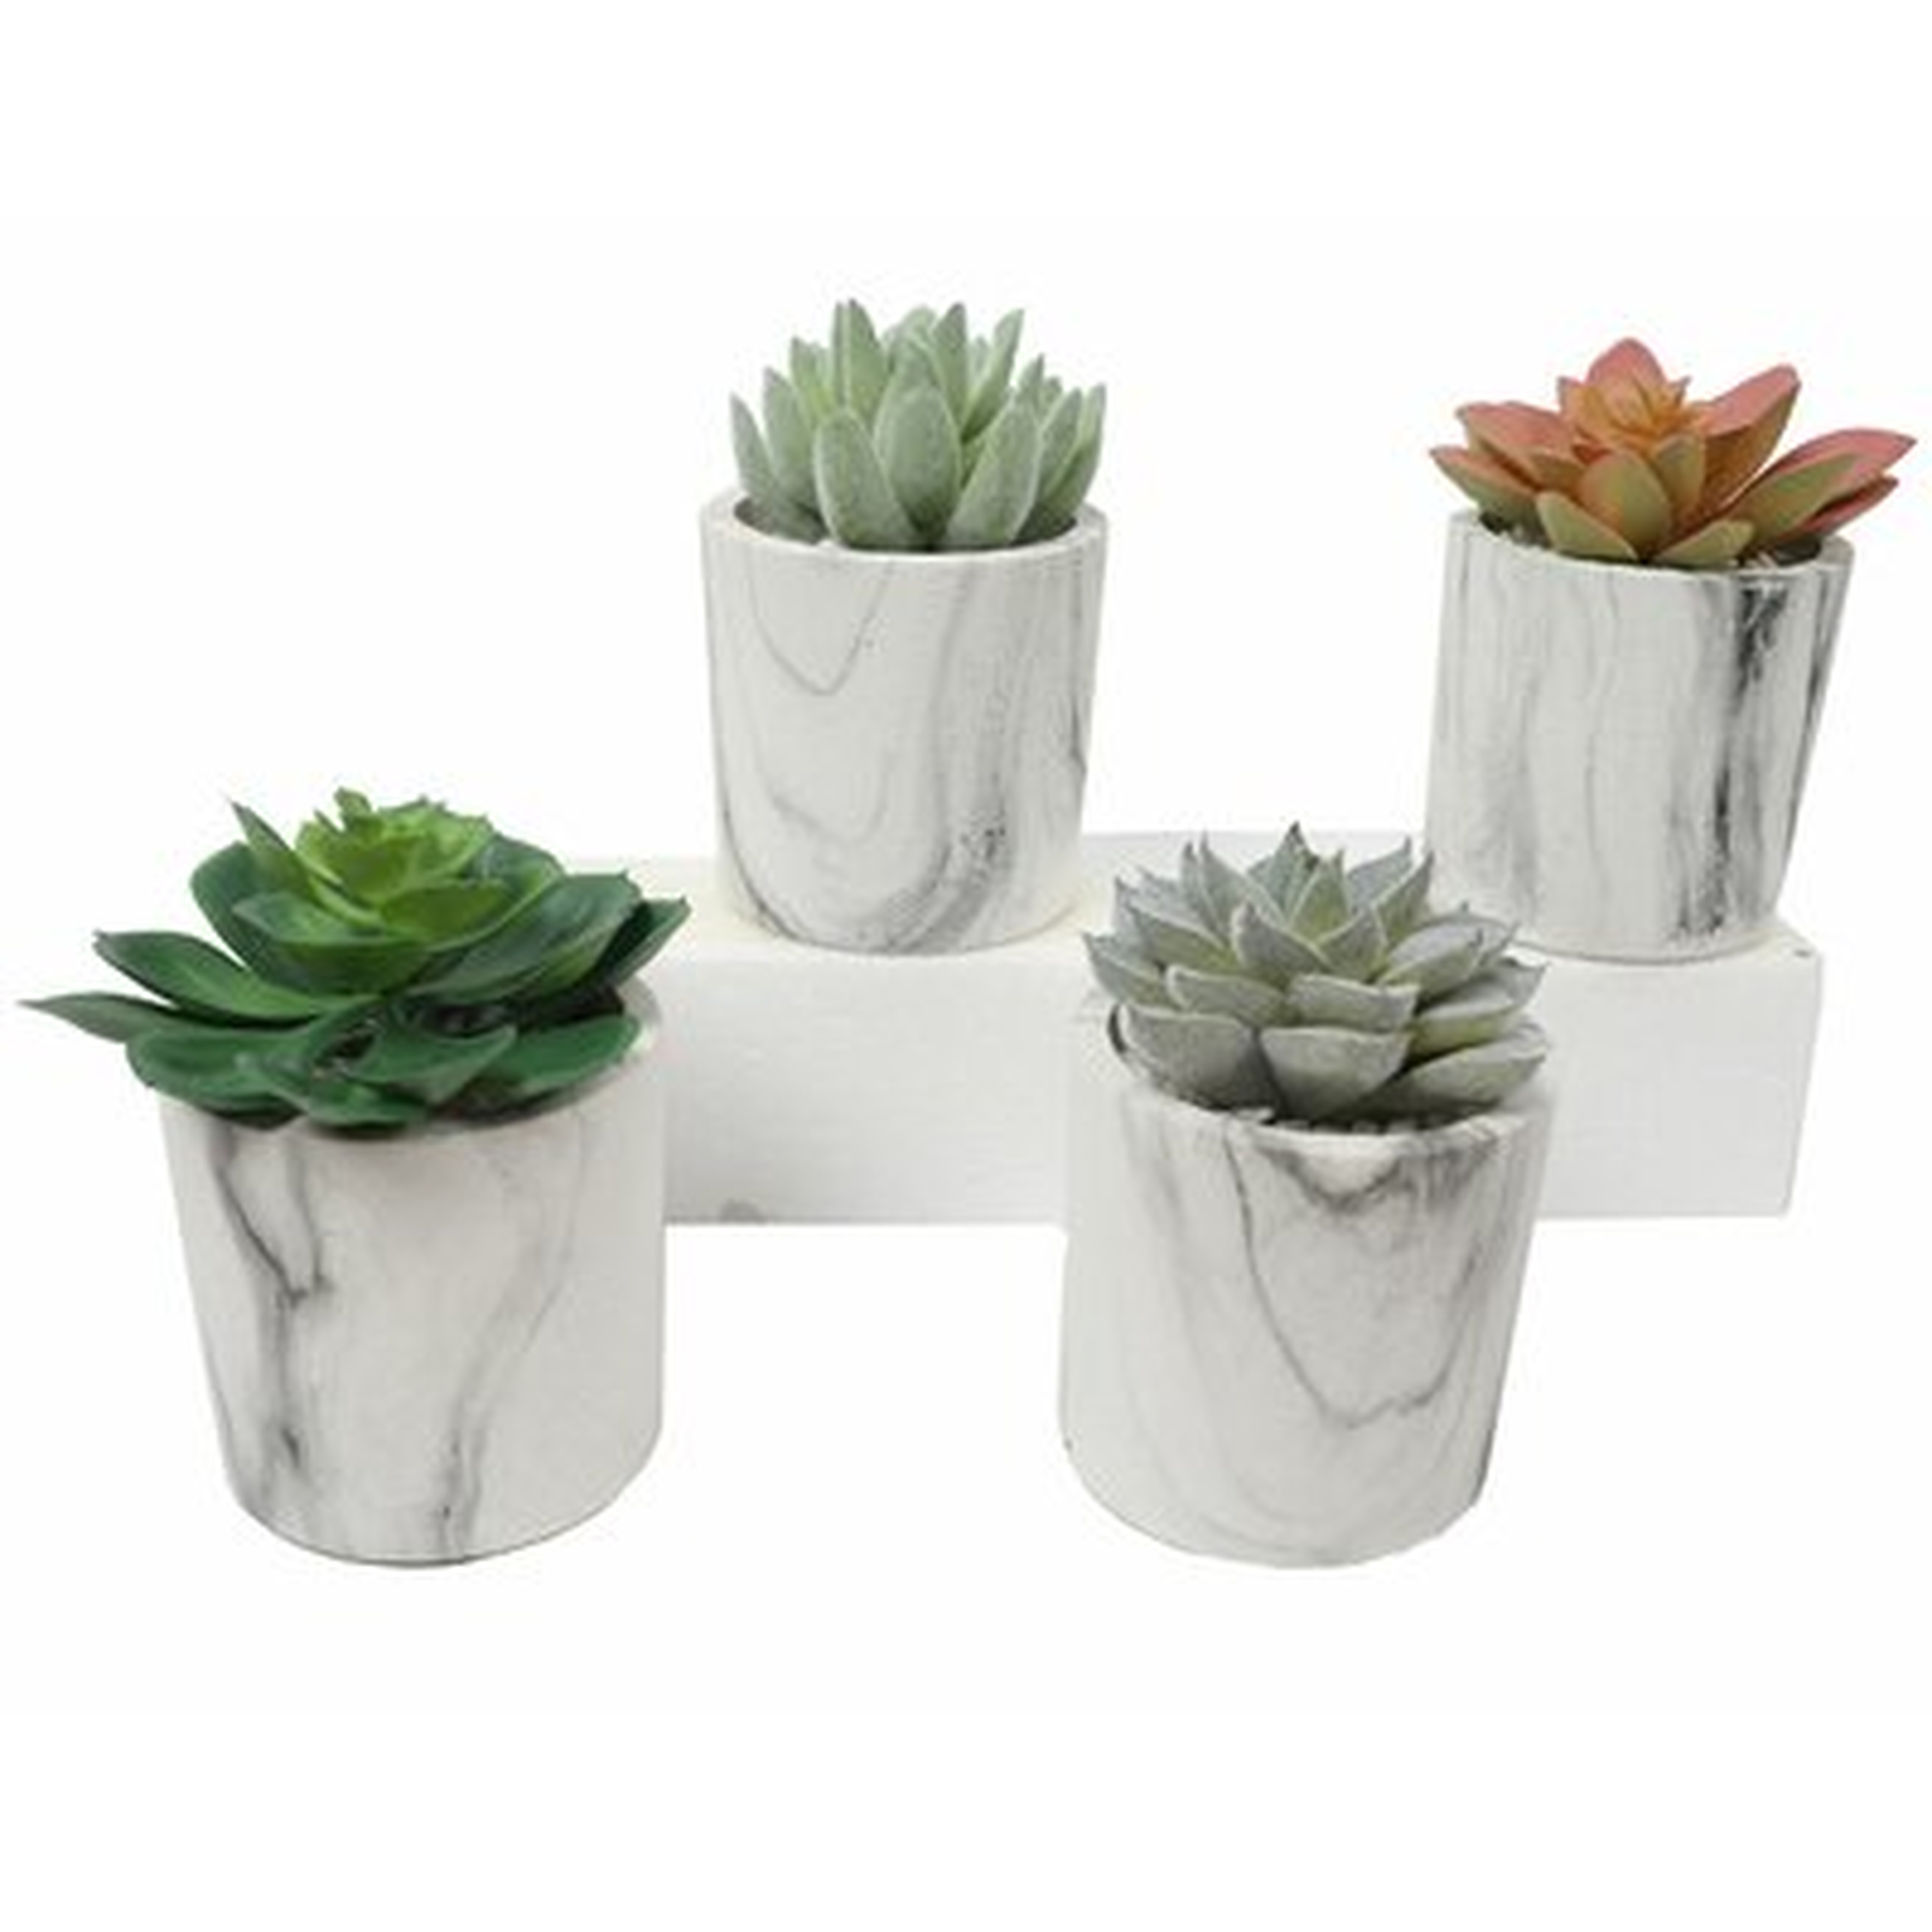 4 Piece Assorted Cactus Succulent in Pot Set - Wayfair